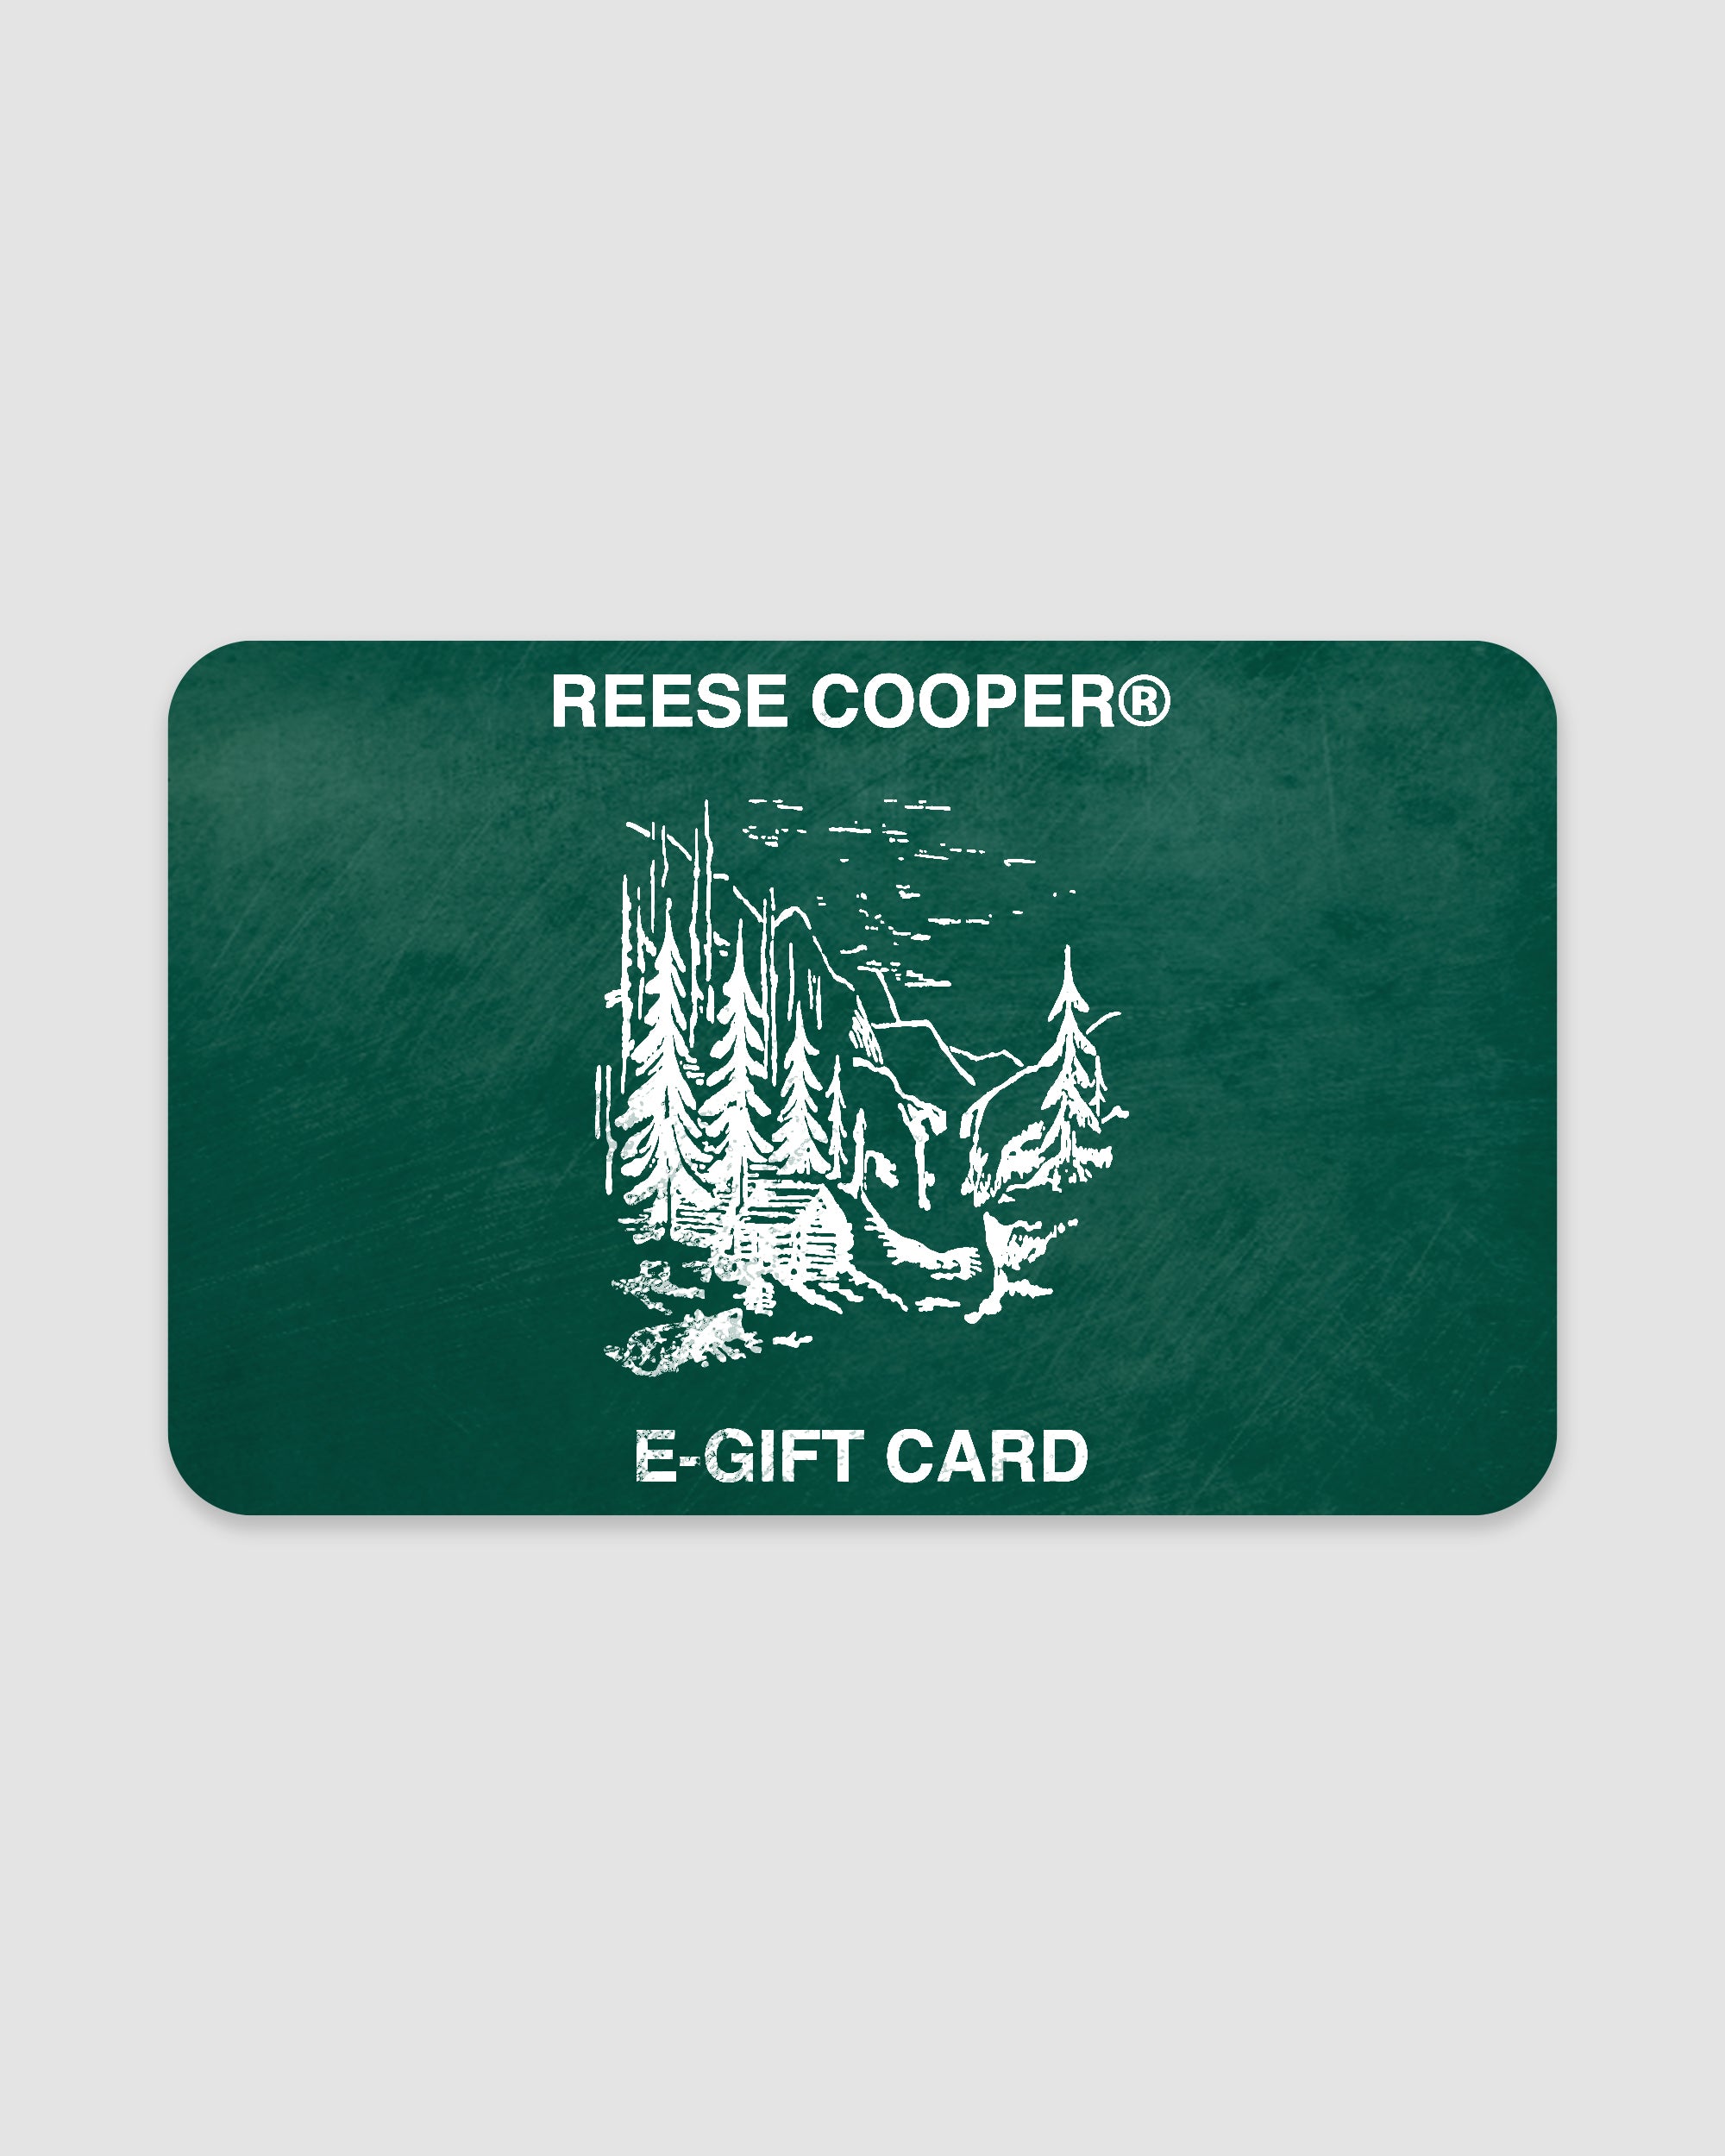 Reese Cooper E-Gift Card